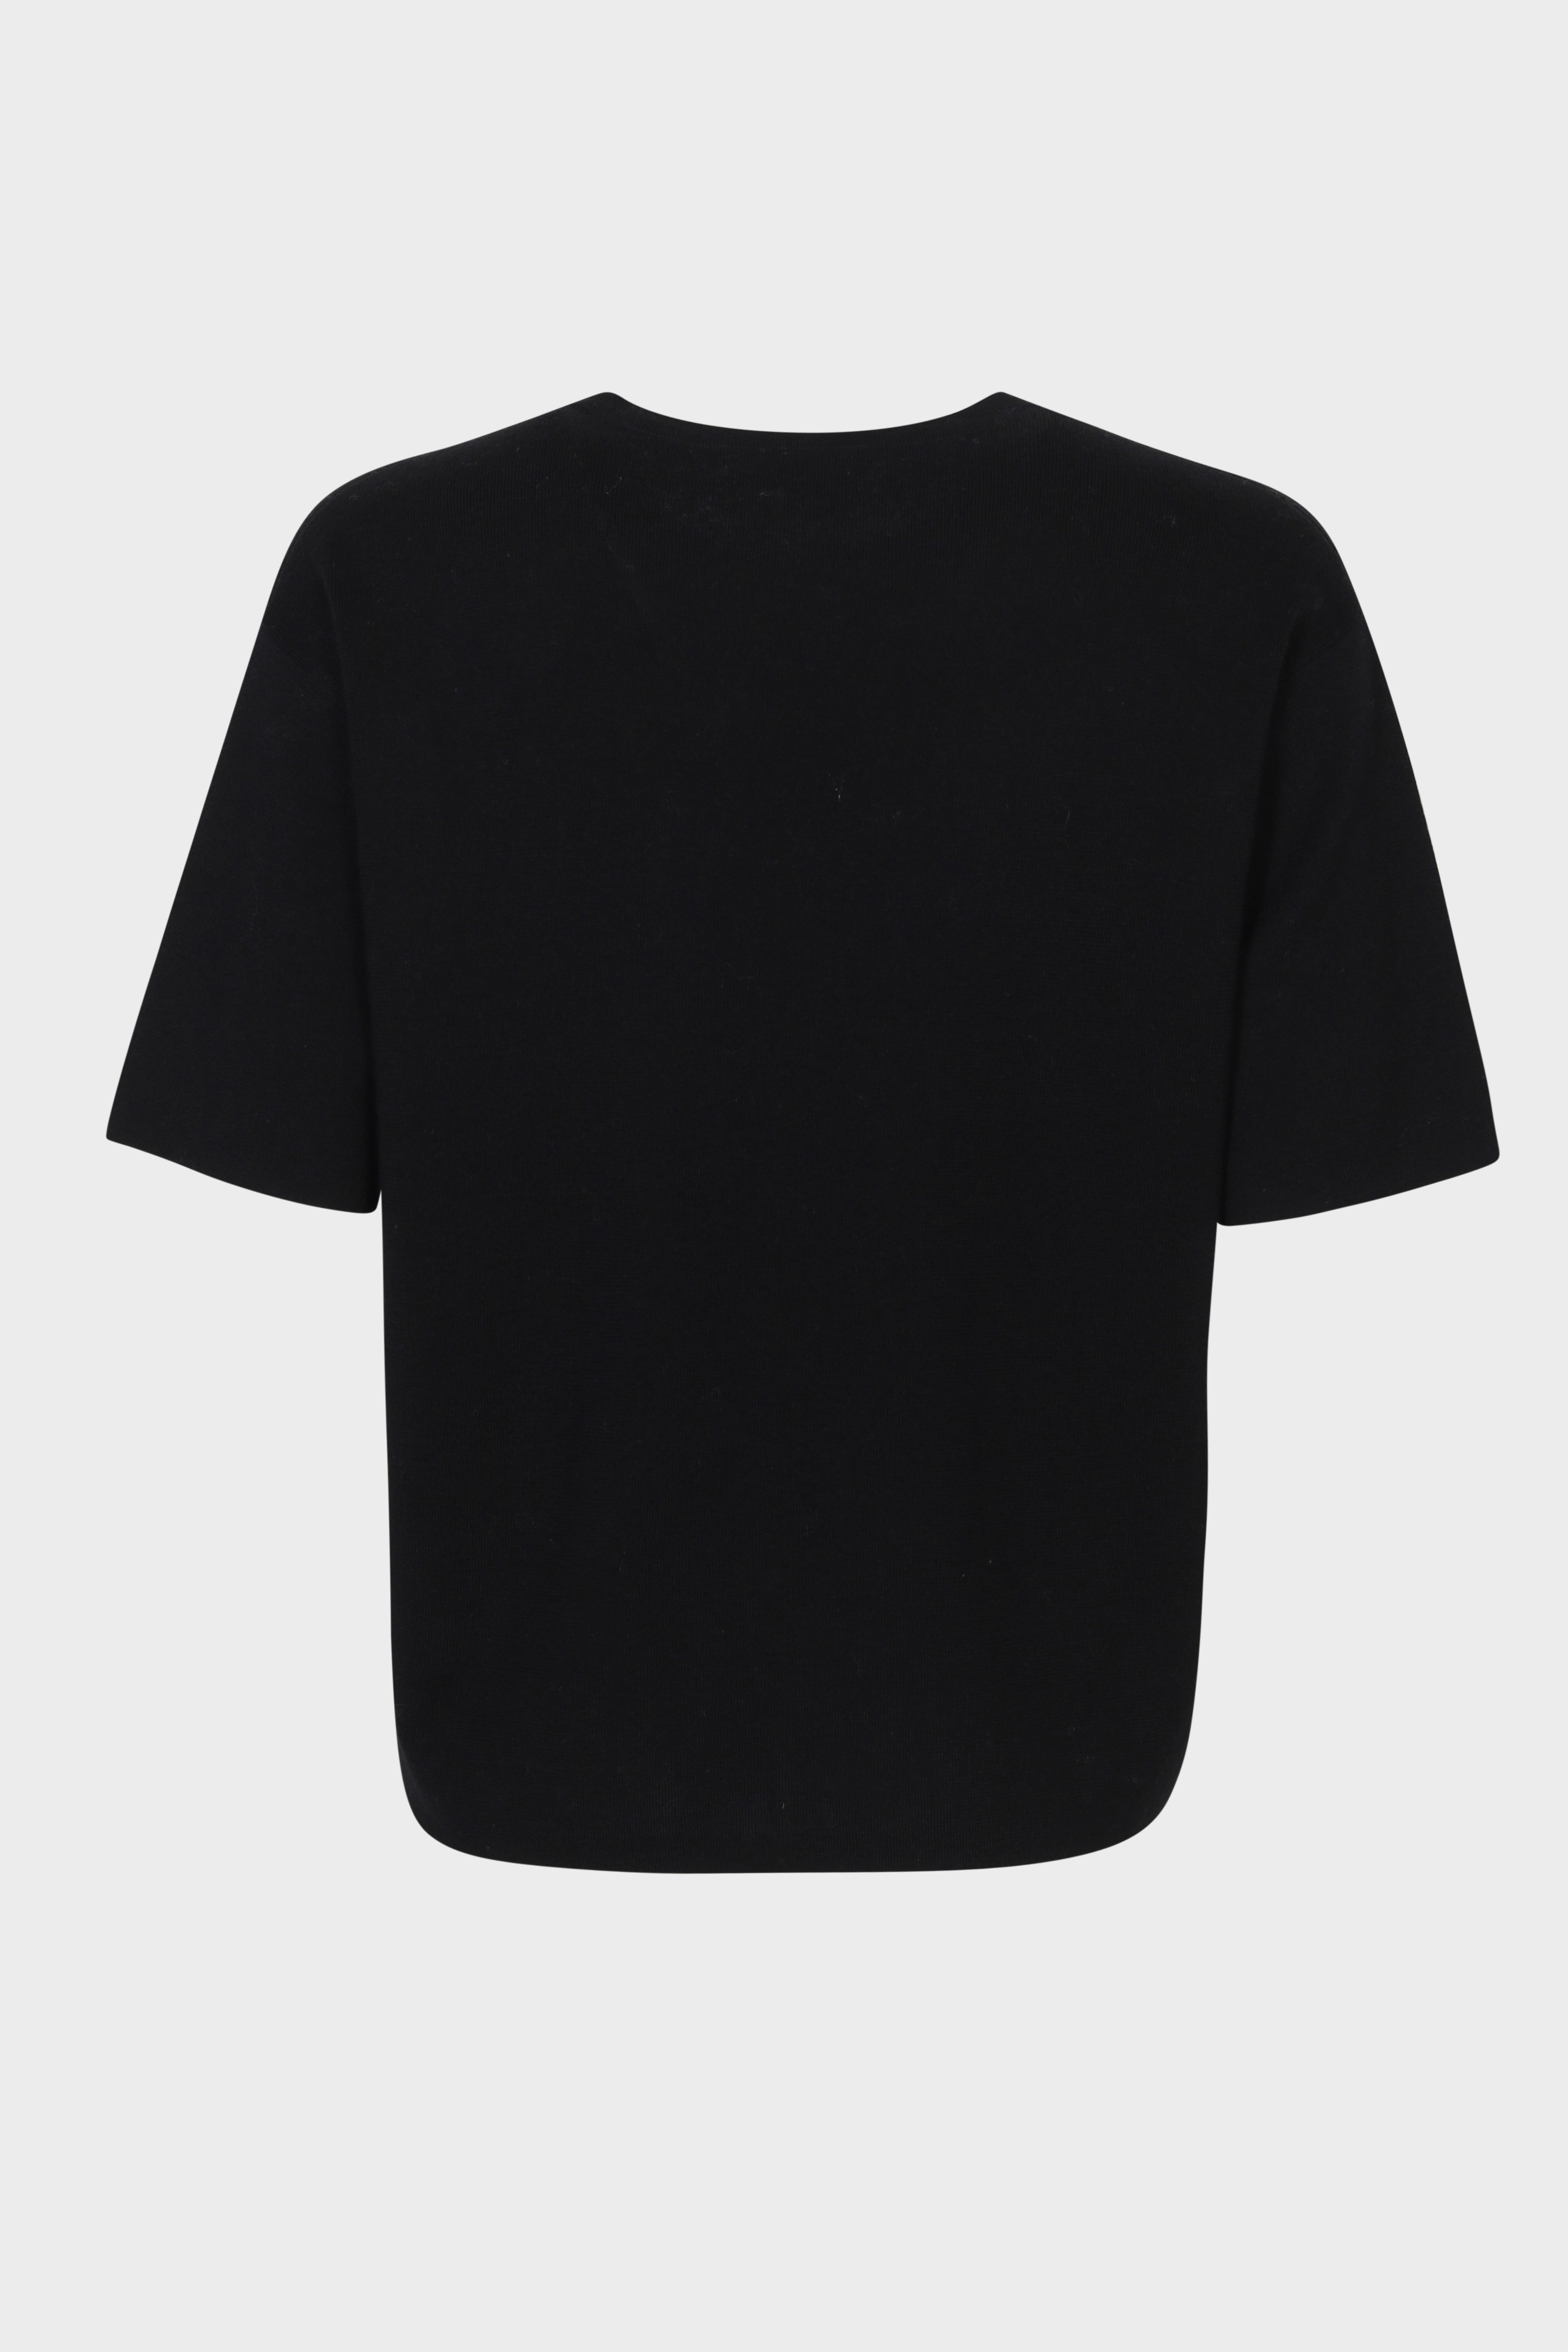 SMINFINITY Knit T-Shirt in Black XS/S